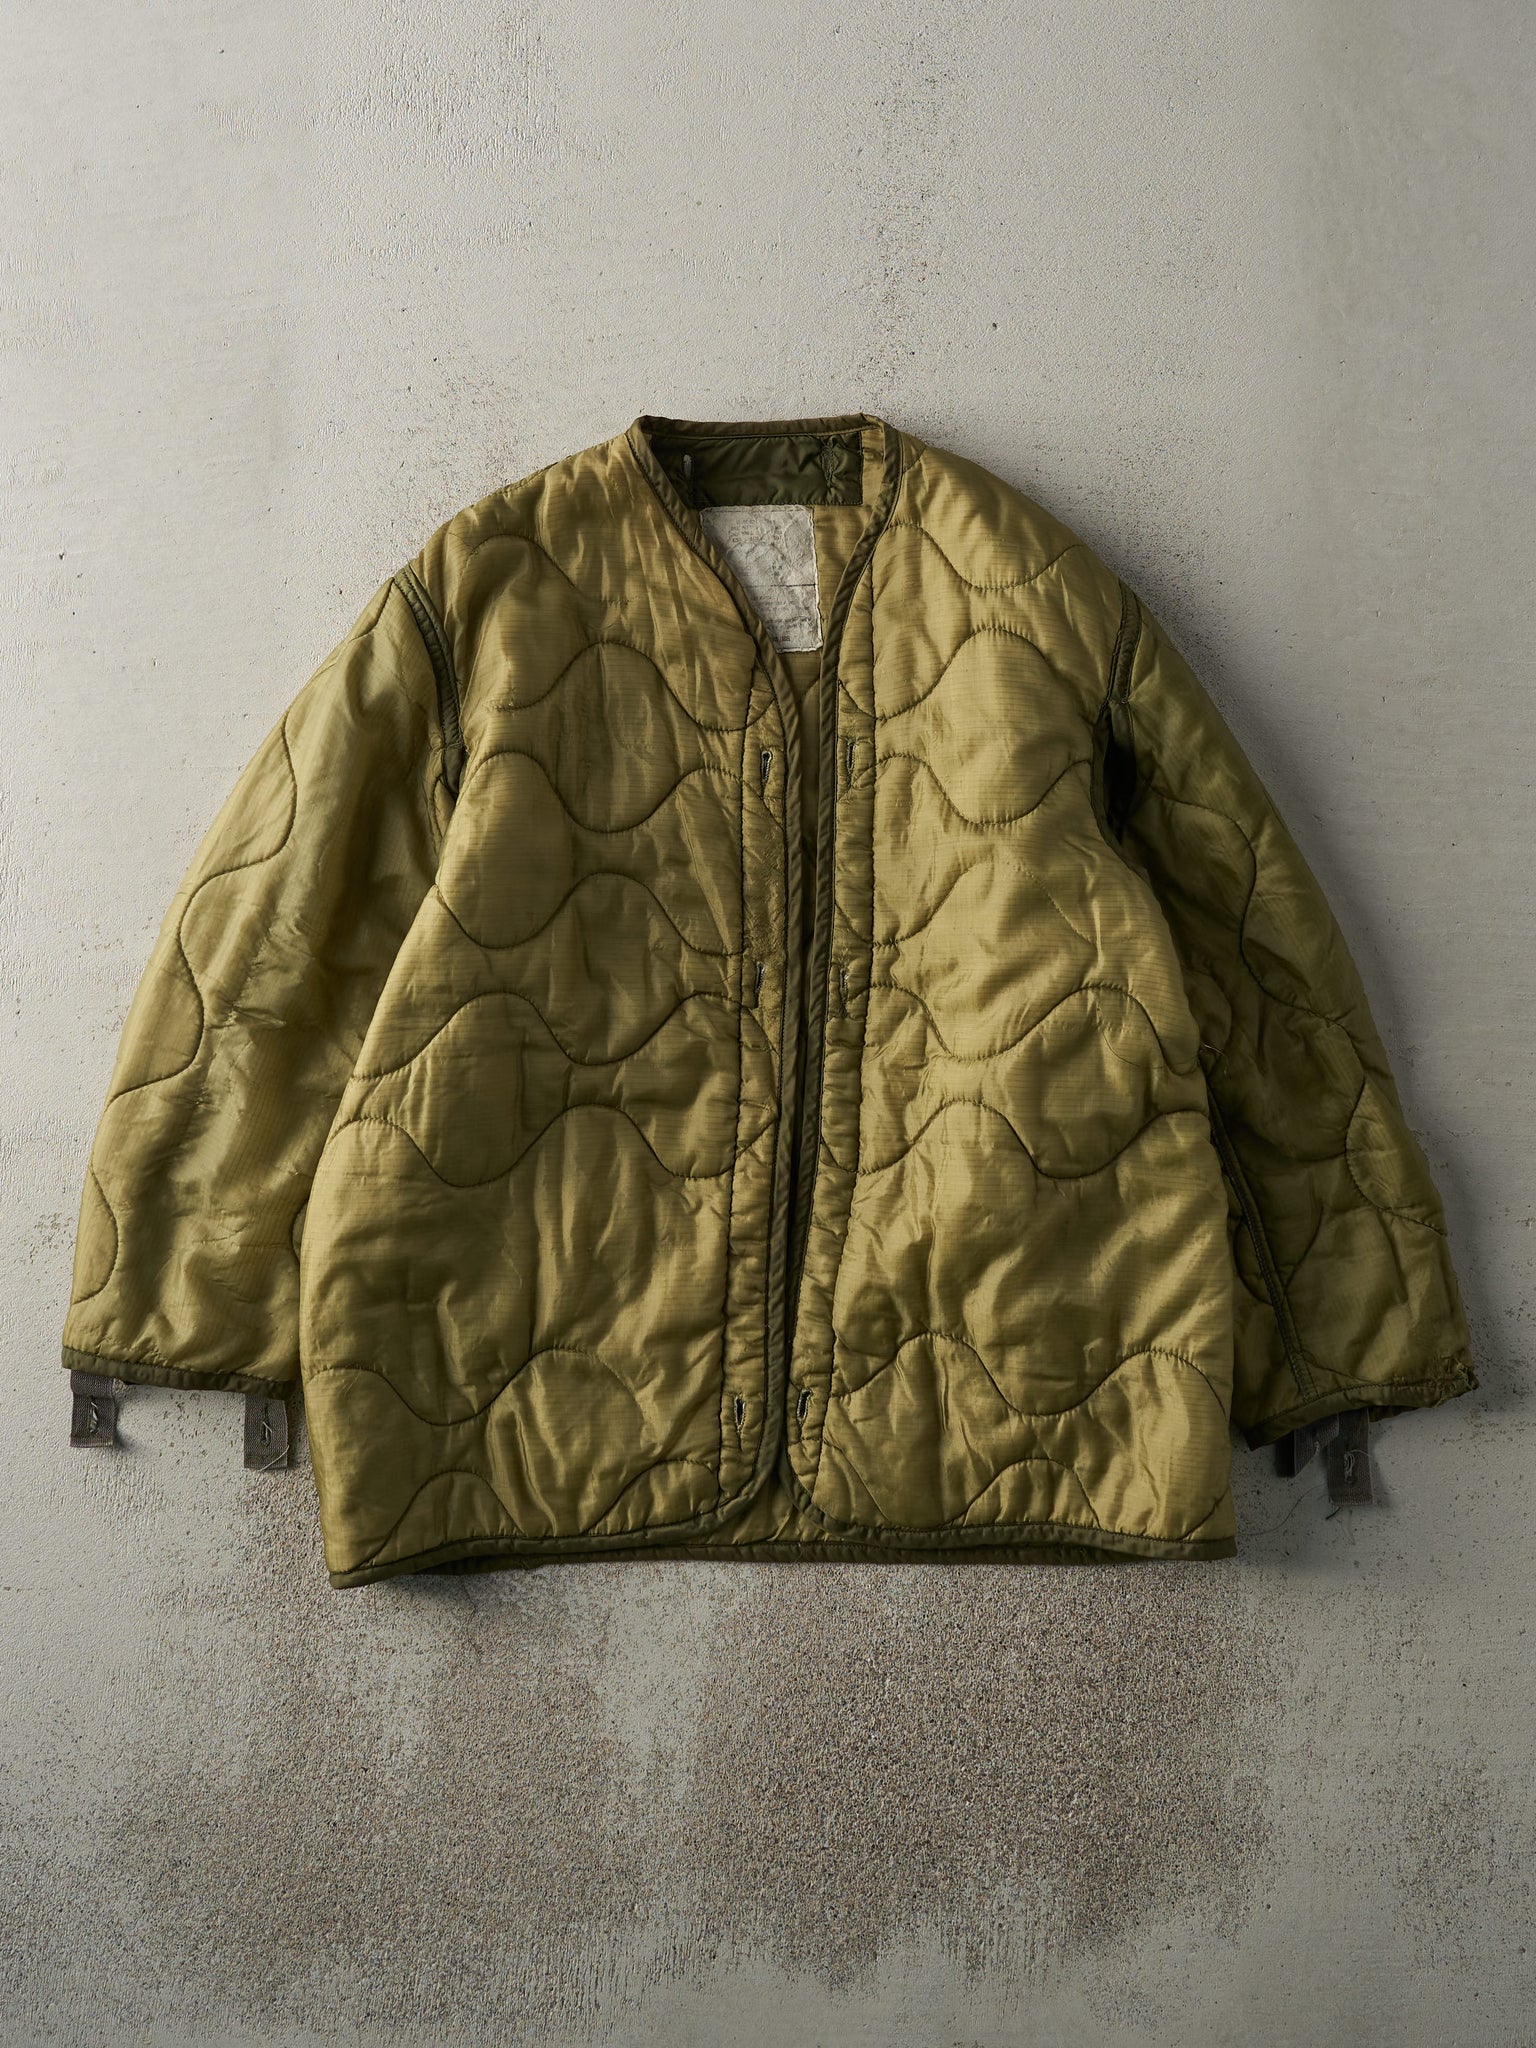 Vintage 90s Olive Green Army Liner Jacket (S/M)